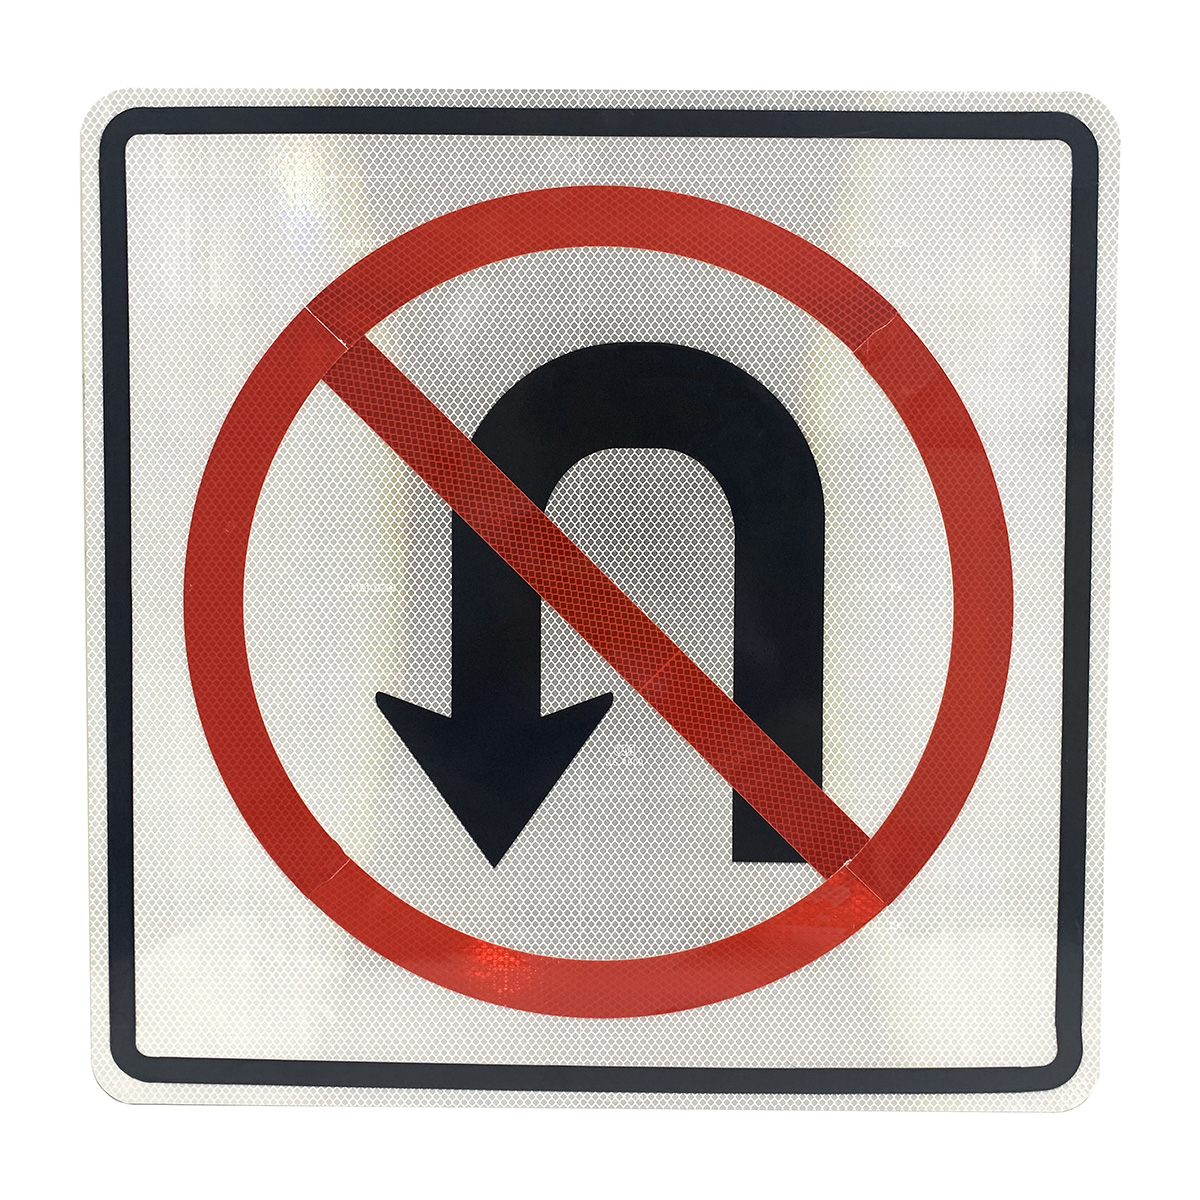 "NO U TURN" Traffic Sign Reflective Aluminium Plate